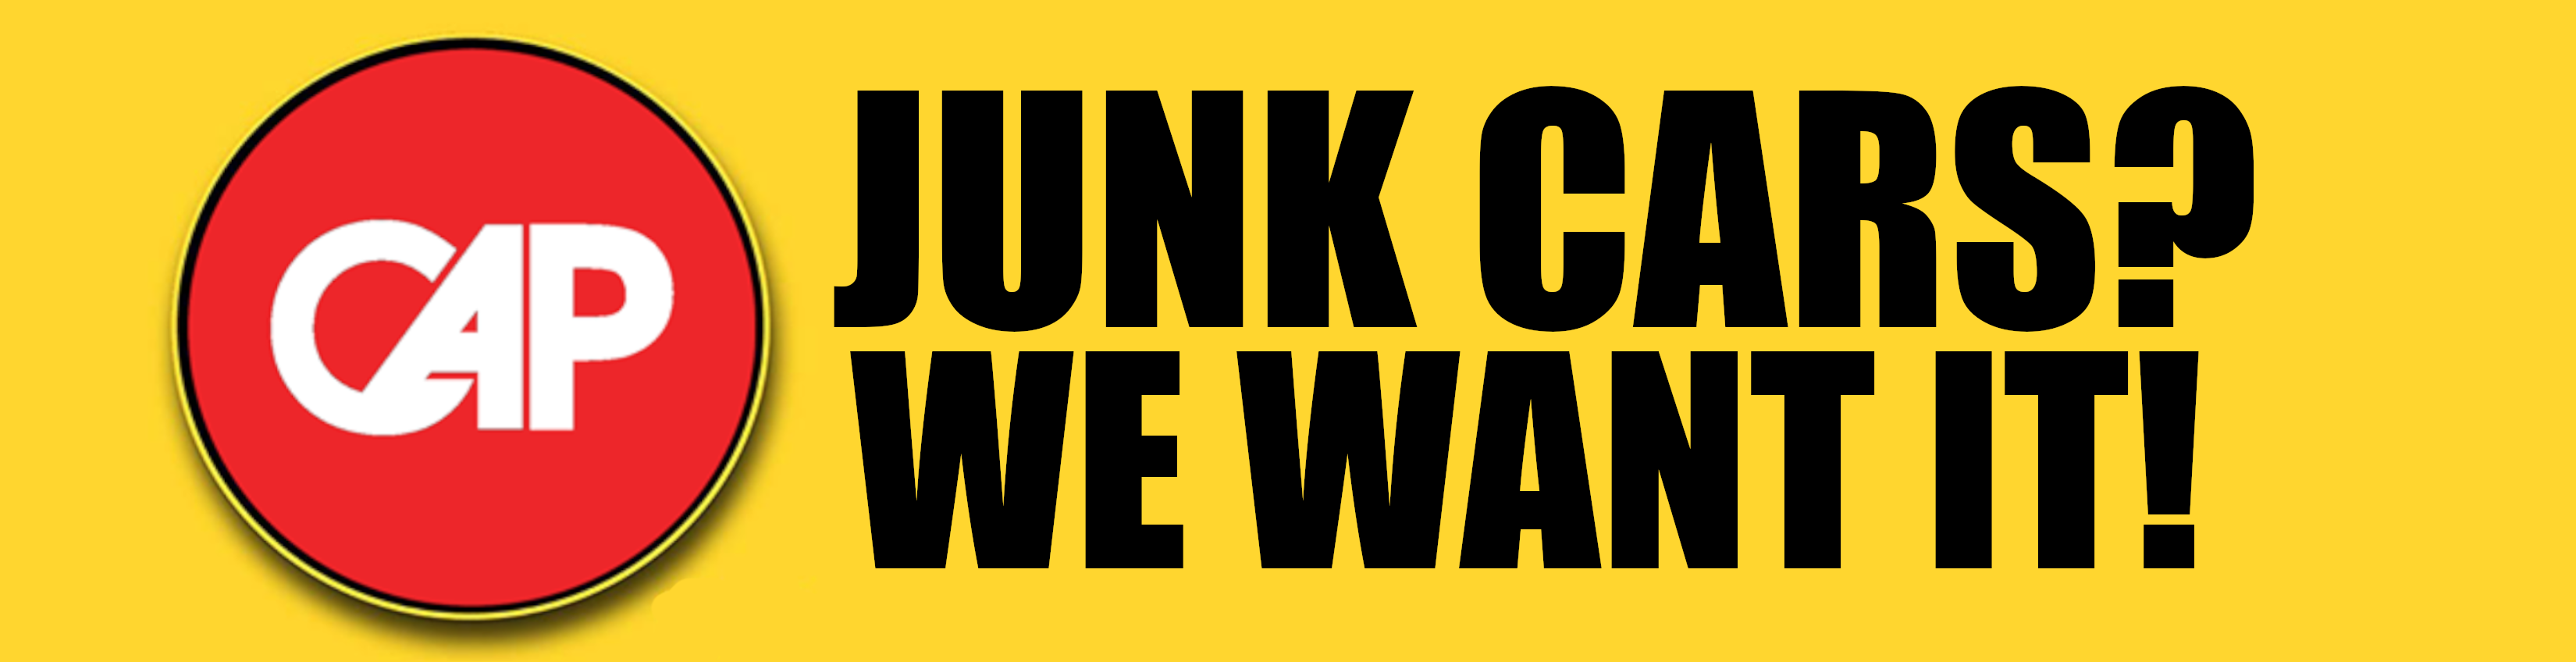 We buy junk cars banner